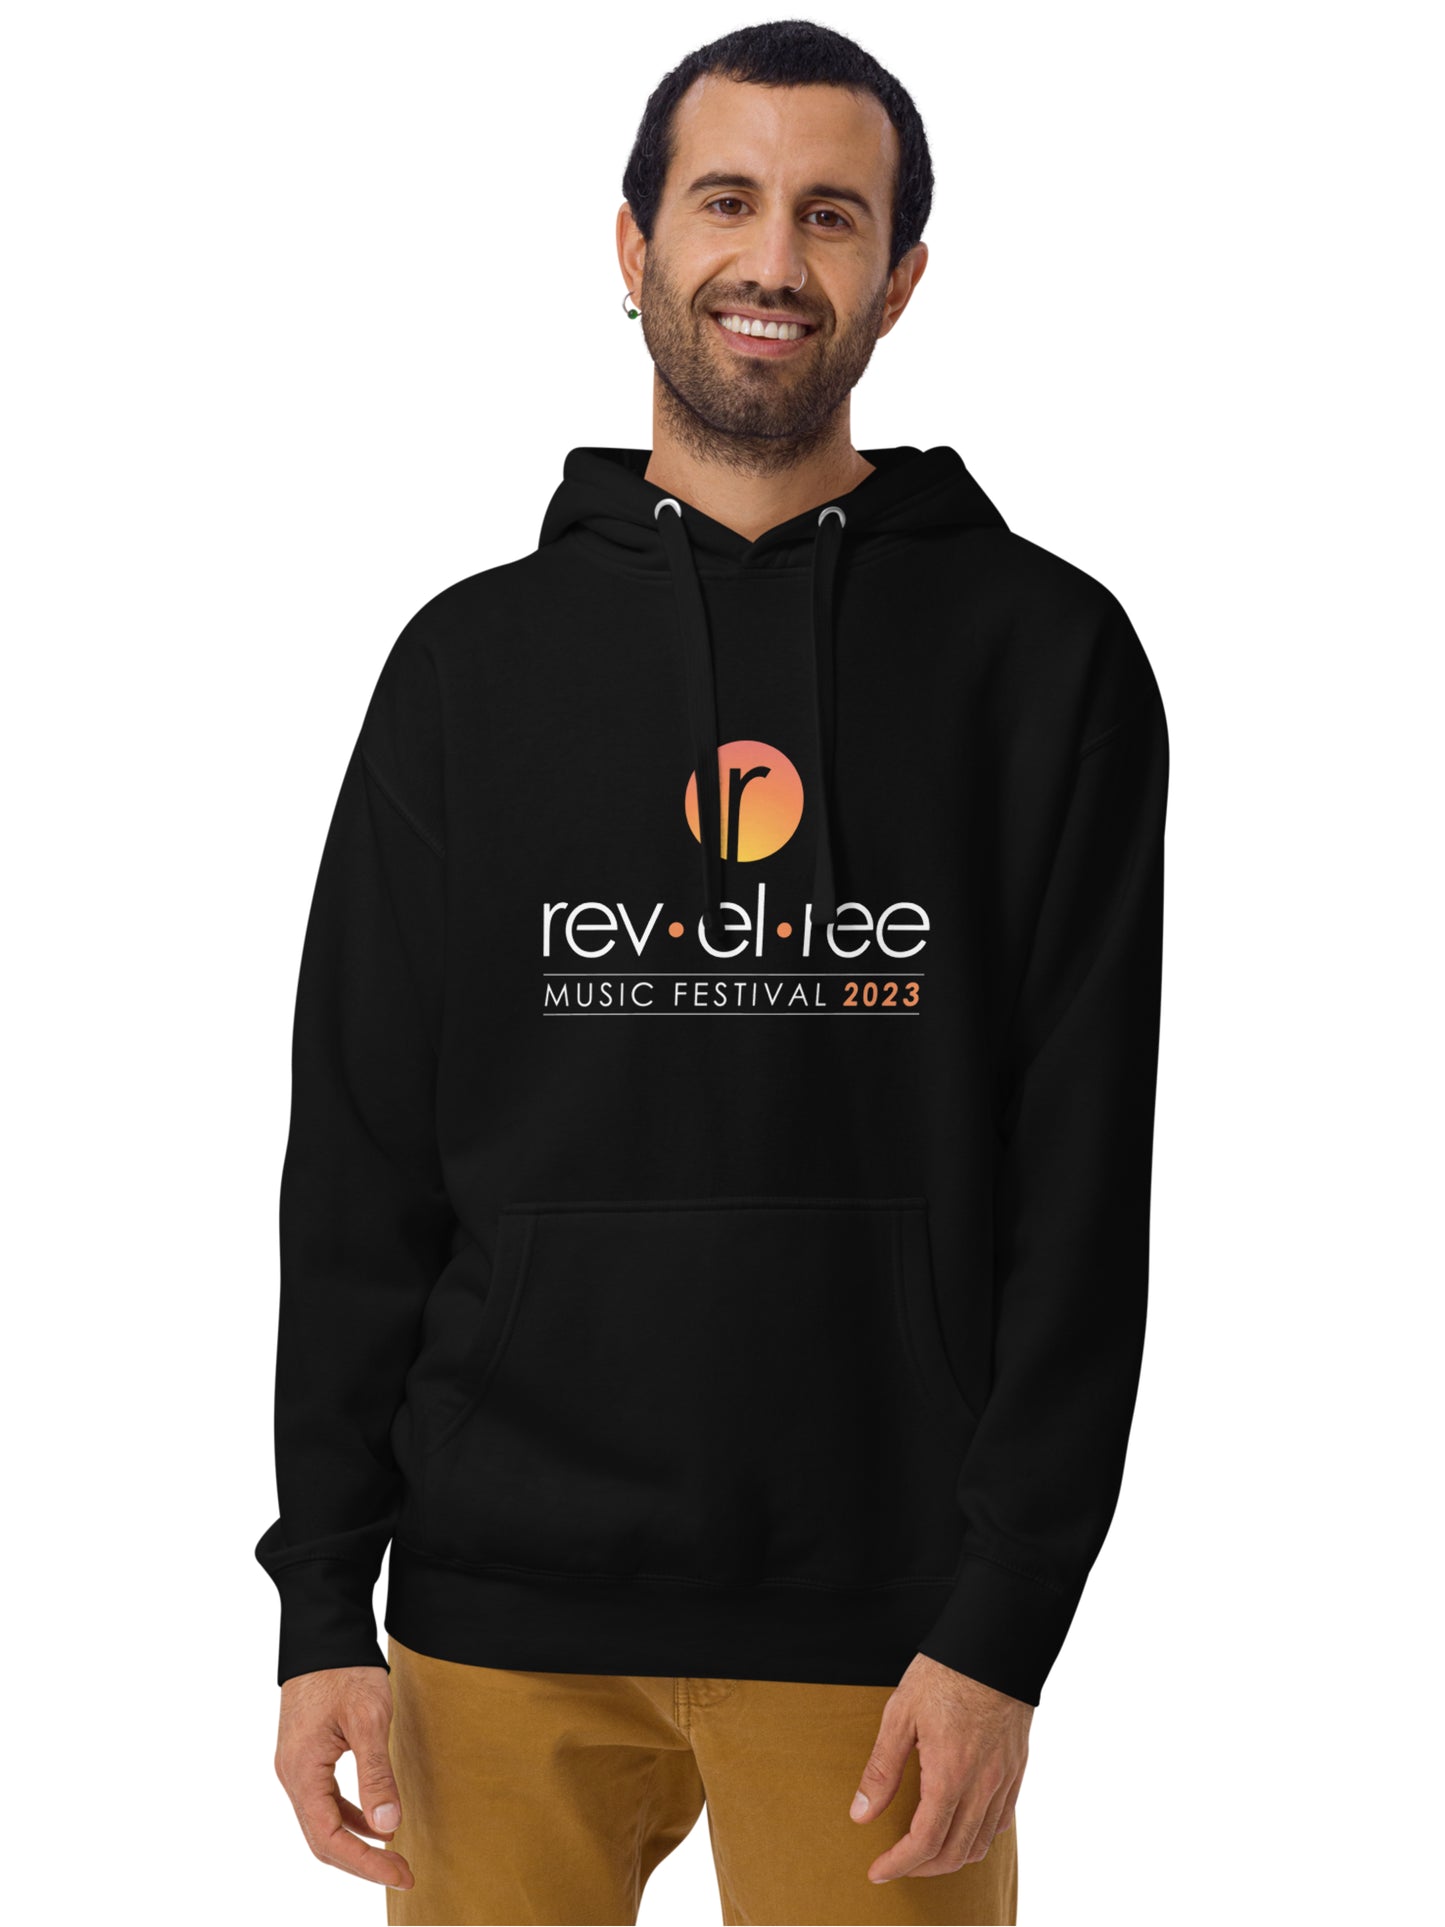 Revelree Music Festival 2023 Sweater - Front 